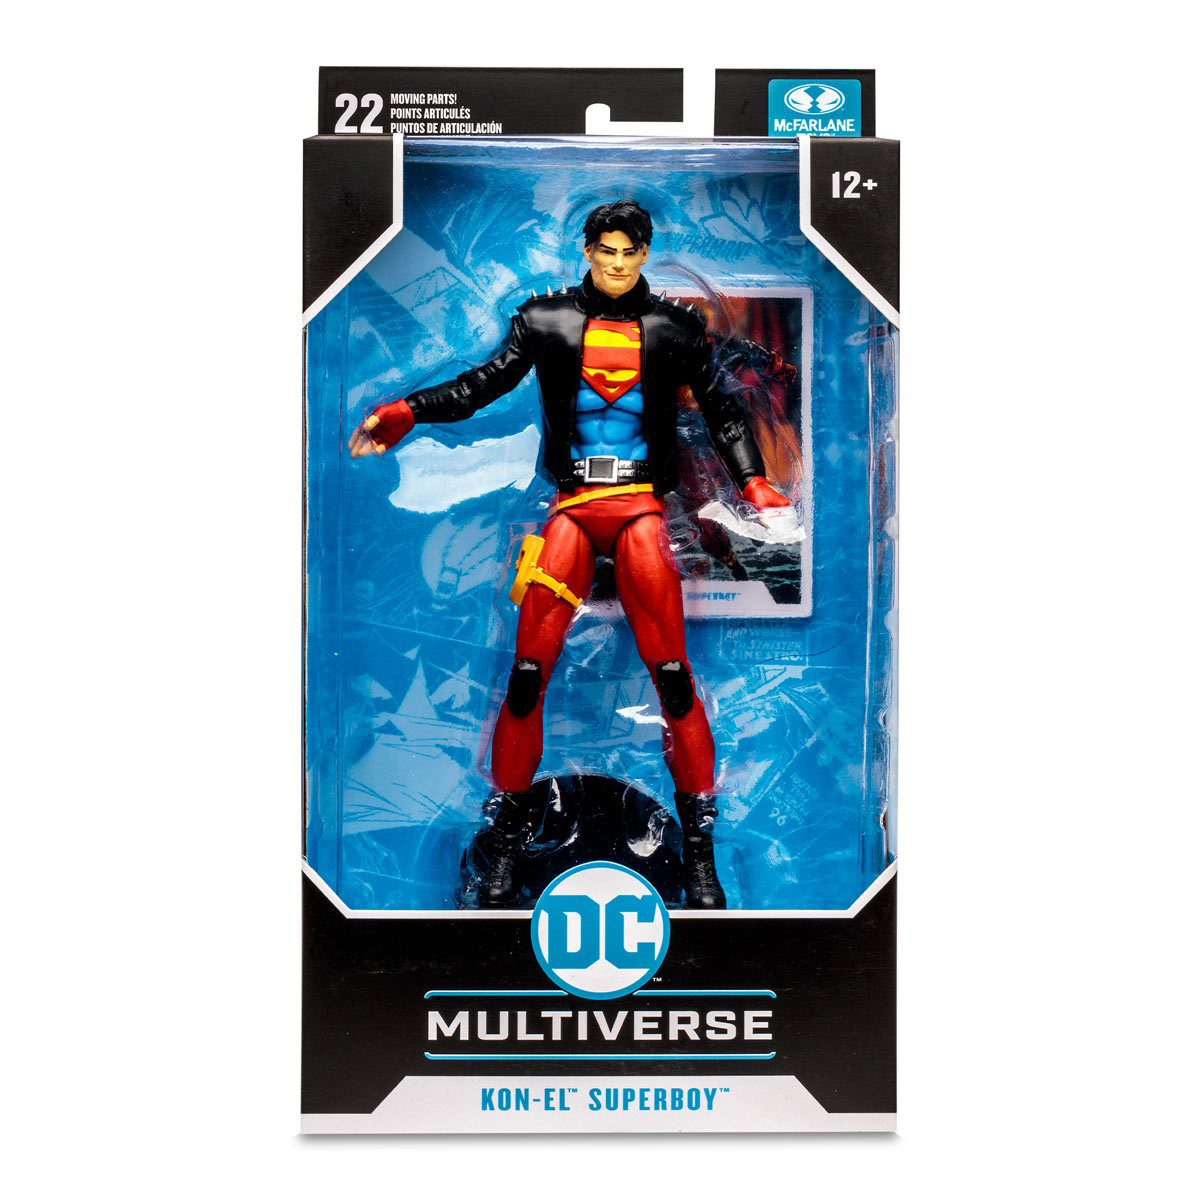 DC-Multiverse-Kon-El-Superboy-Action-Figure-Mcfarlane-Toys-Packaging-Box-Art